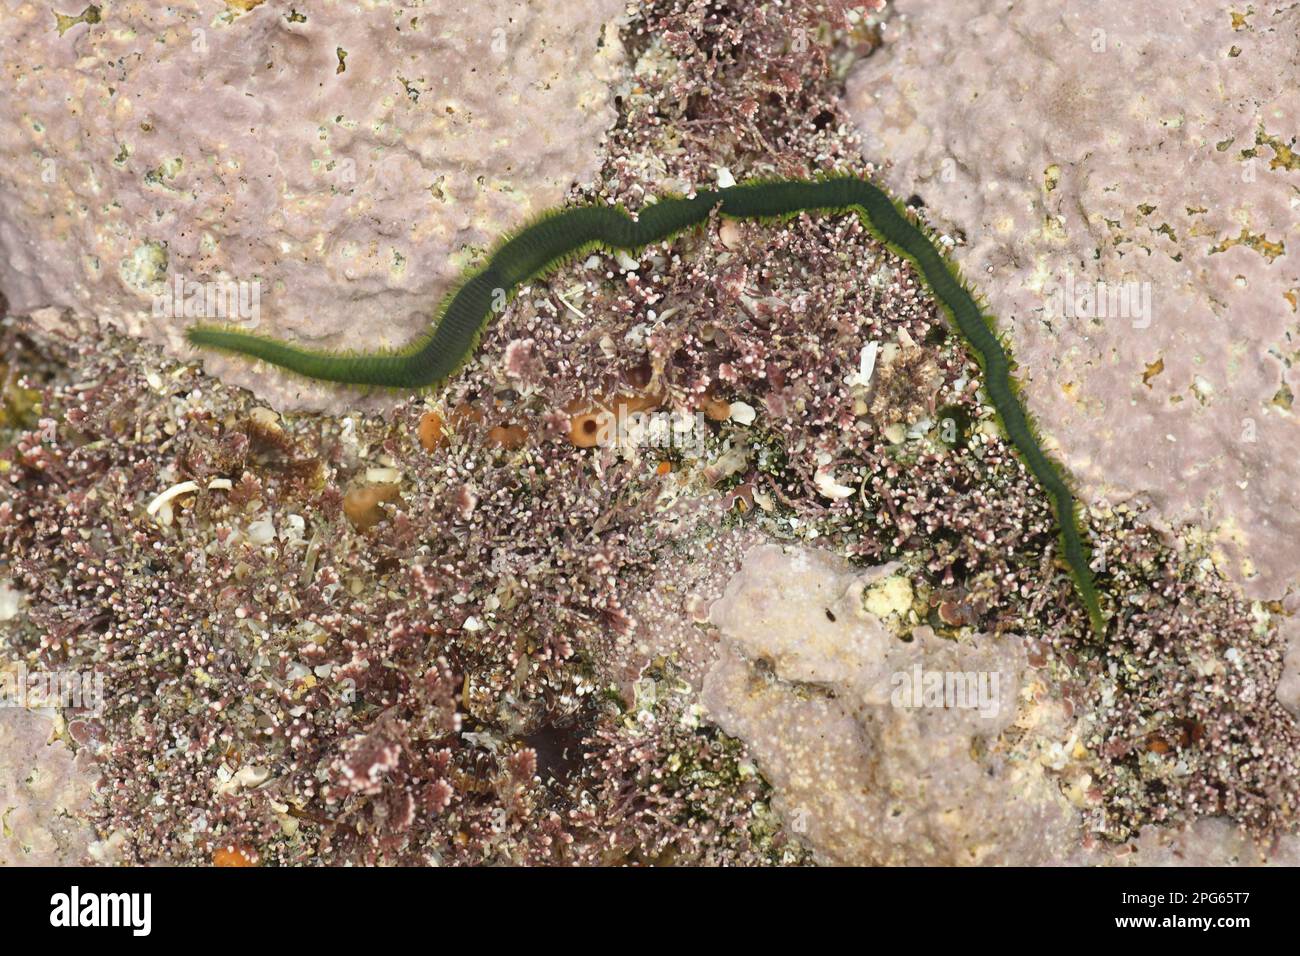 Green Bristleworm, Green bristle worms, Polychaetae, Animals, Other animals, Worms, Greenleaf Bristleworm (Eulalia viridis) adult, in rockpool at low Stock Photo